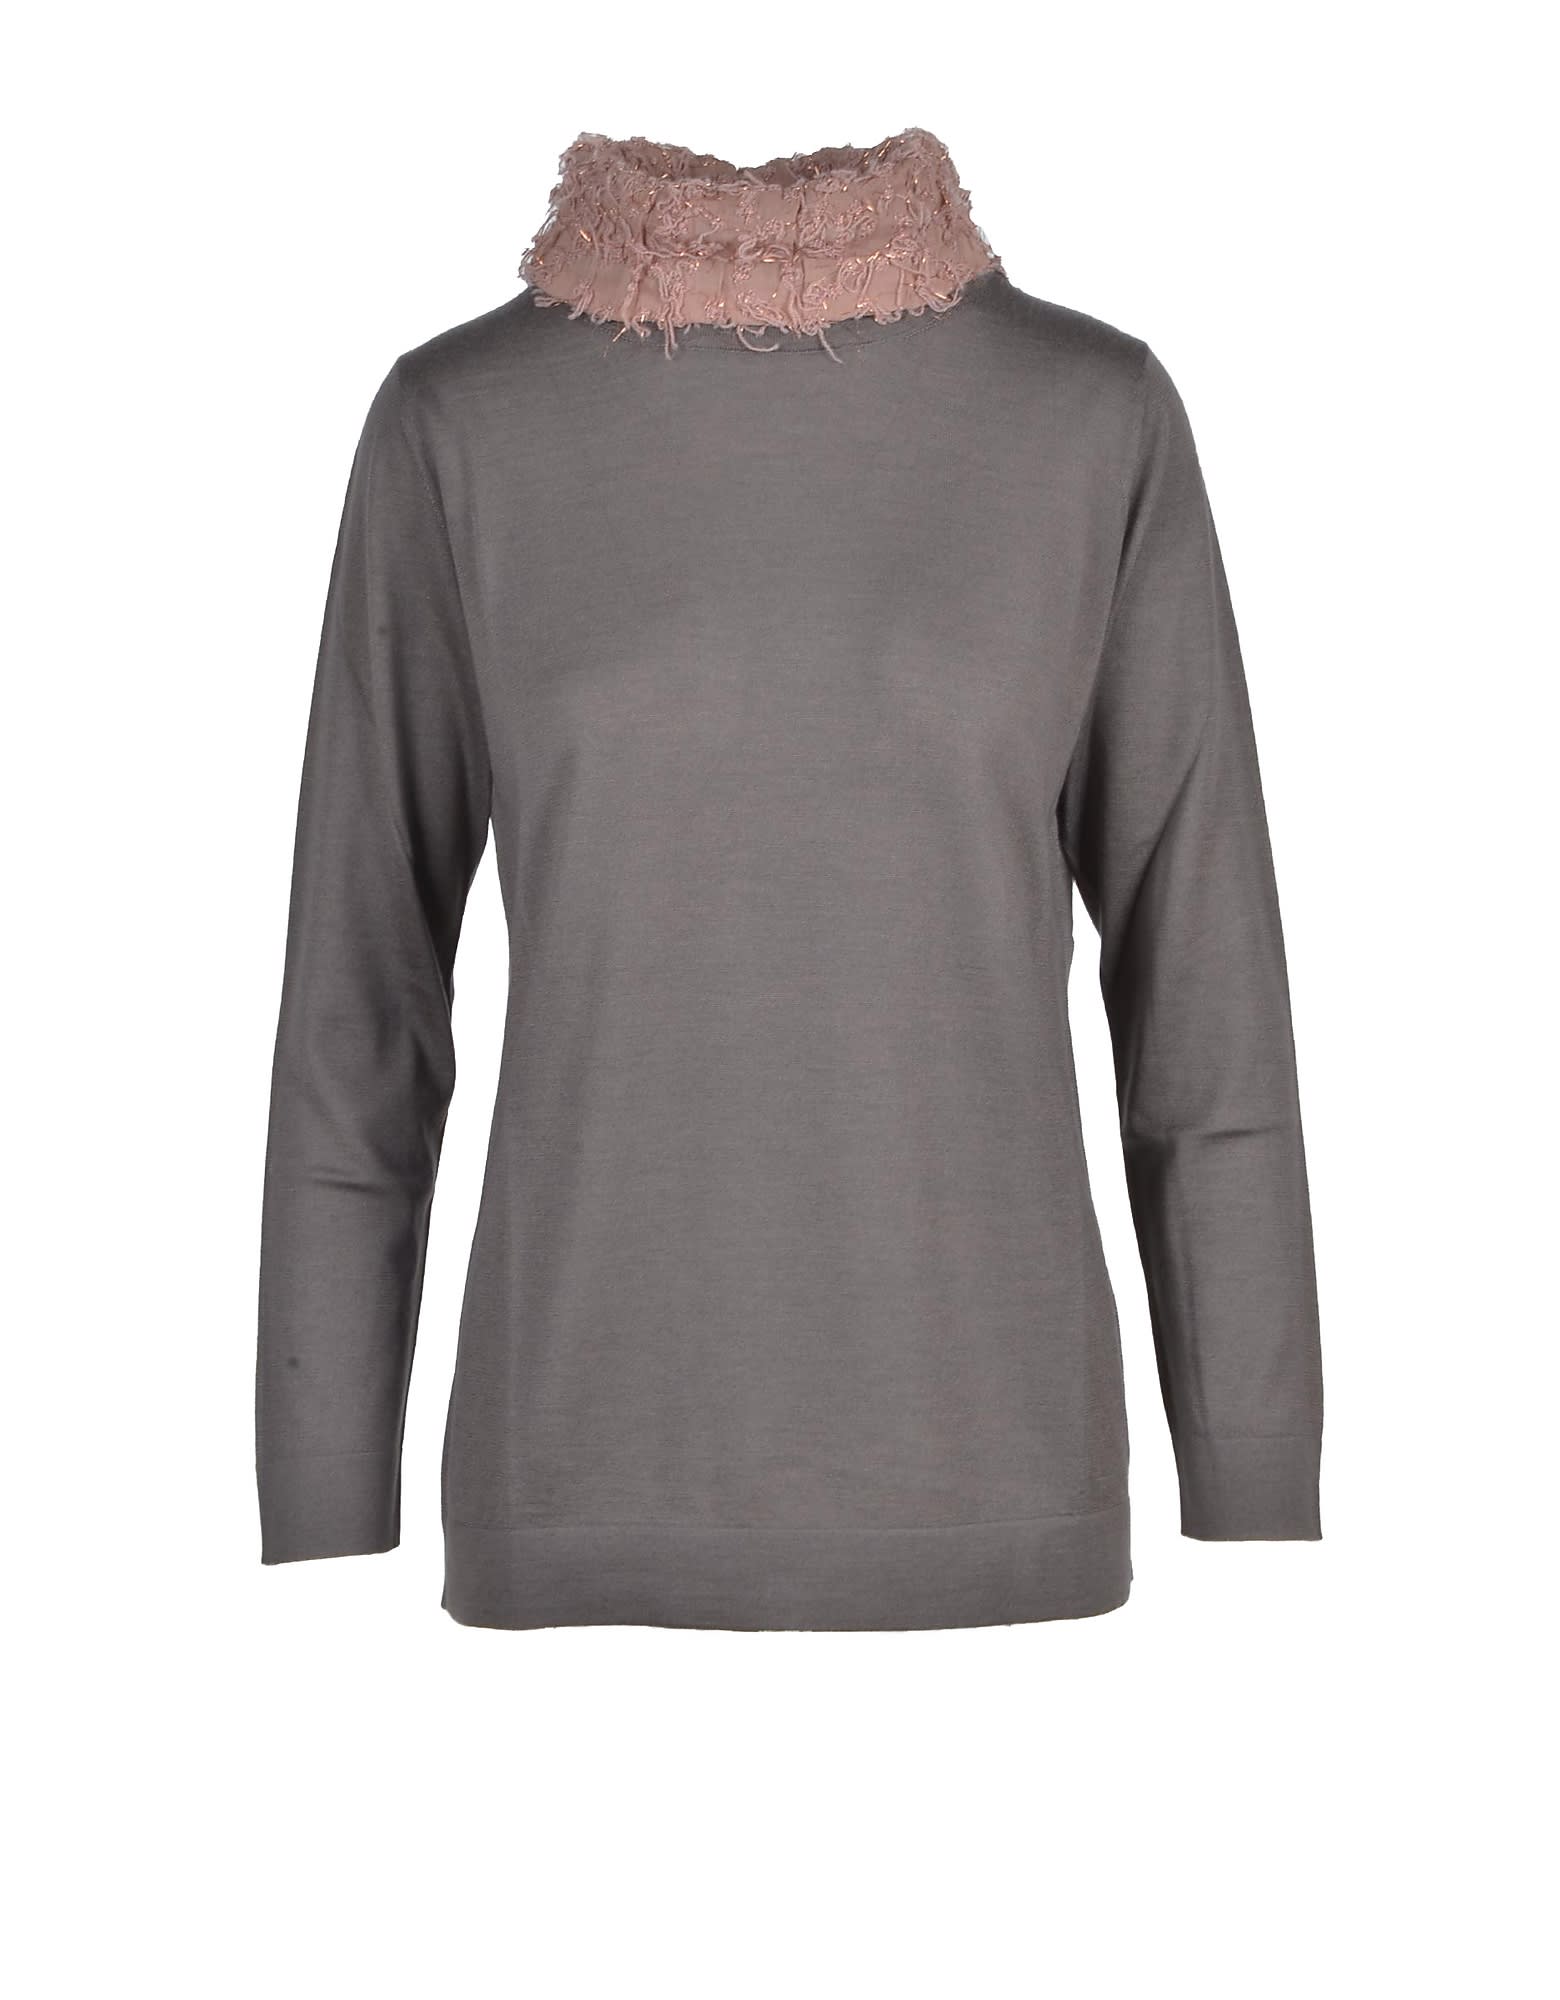 Fabiana Filippi Womens Brown Sweater